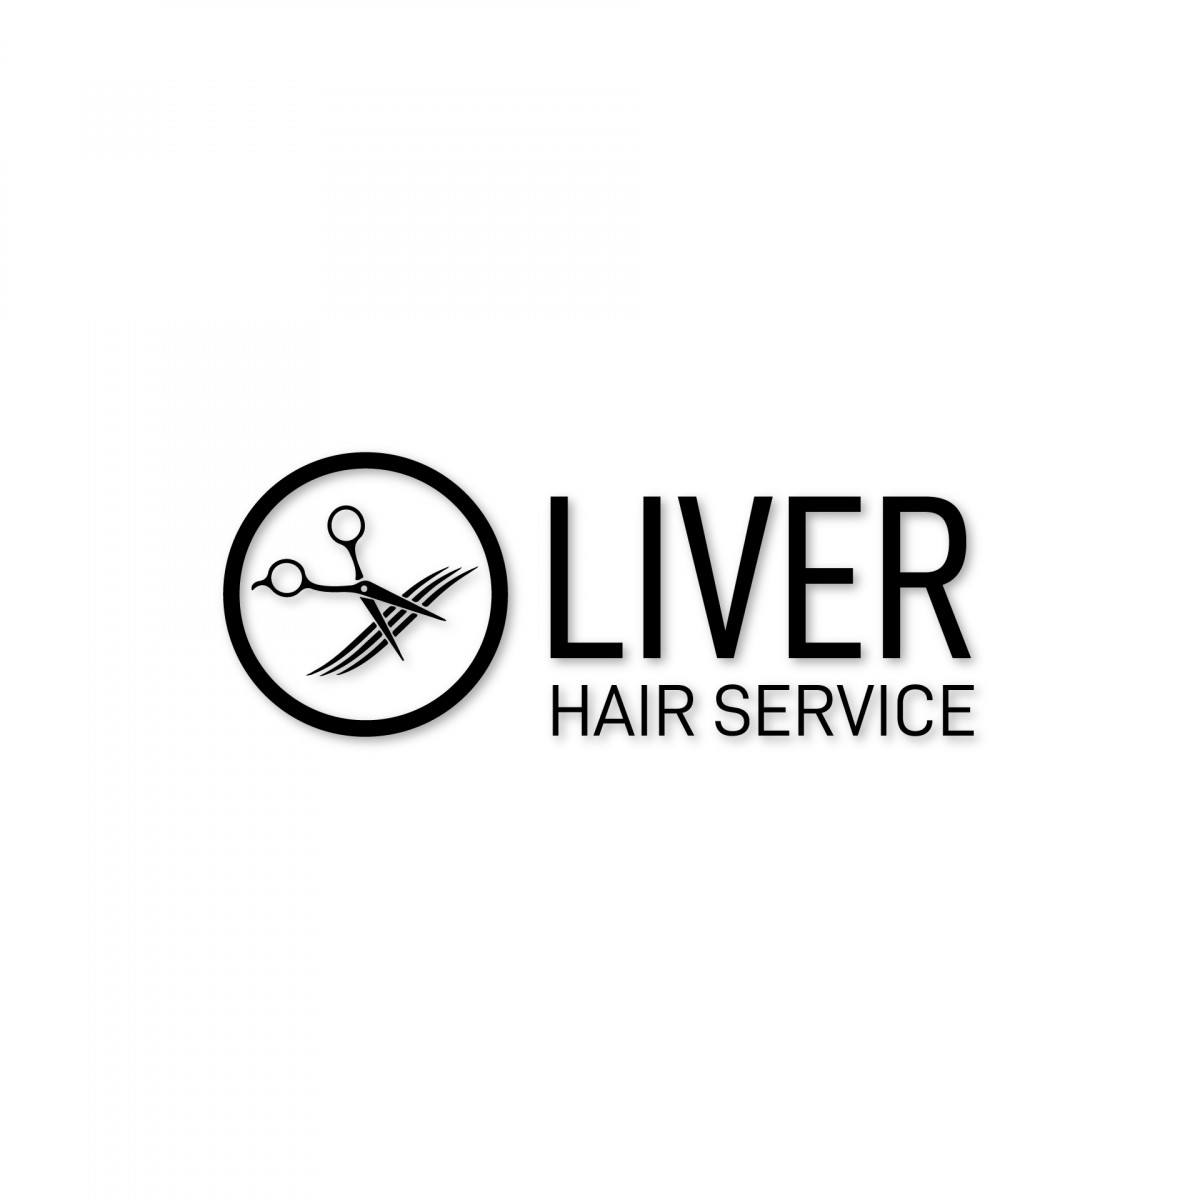 Oliver Hair Service - Fodrászat